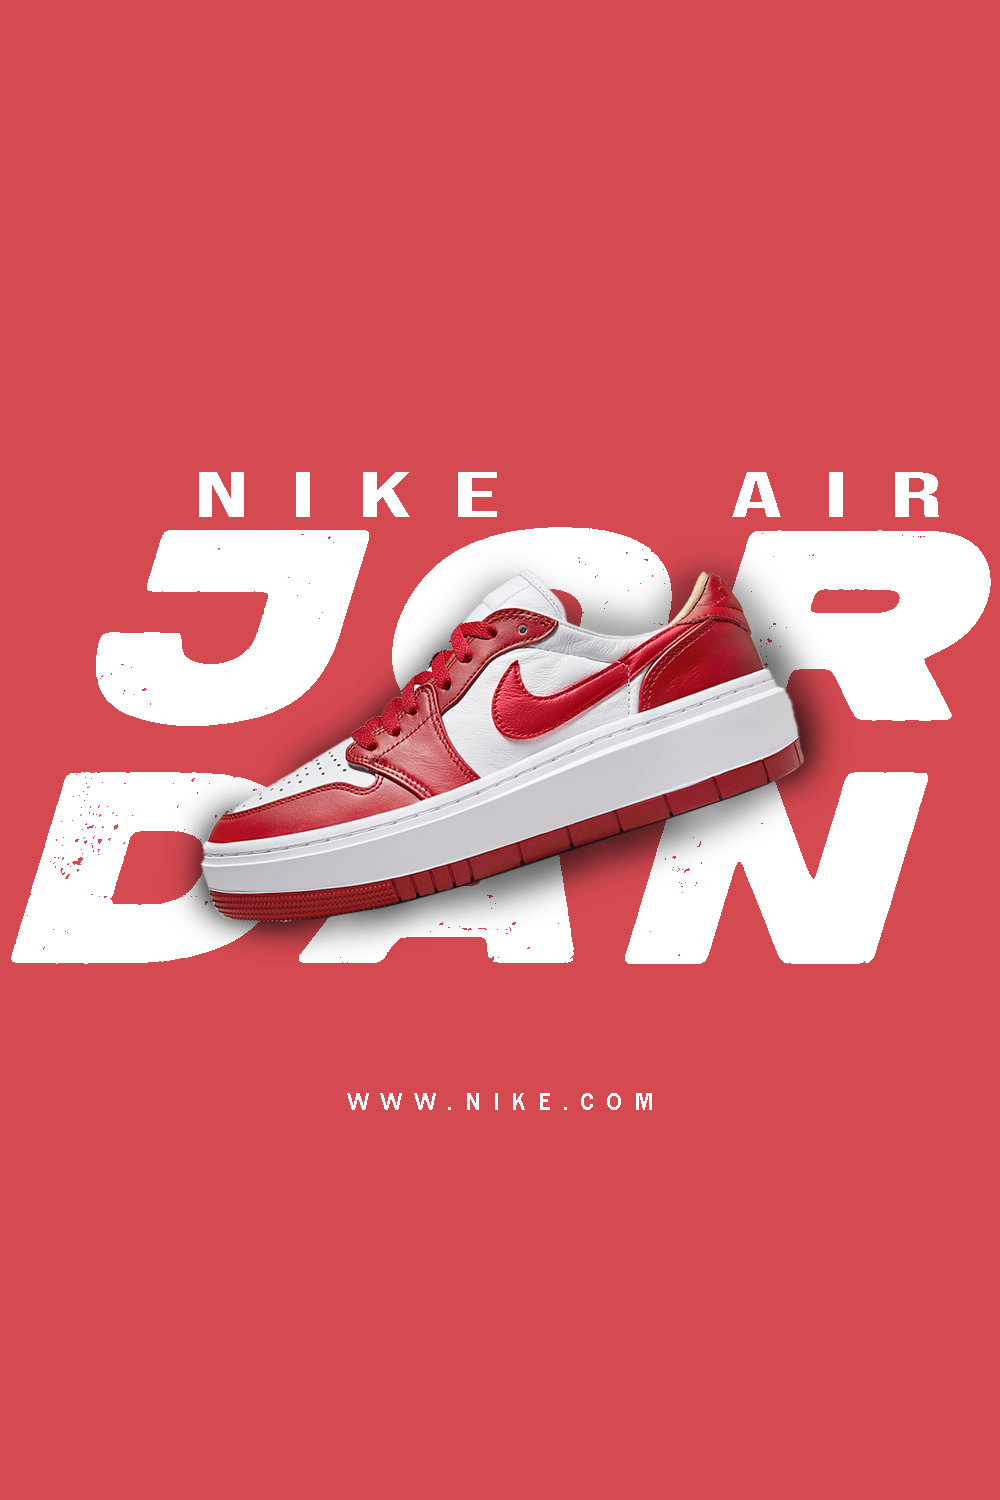 Air Jordan 1 Elevate Low Shoes Poster pinterest preview image.